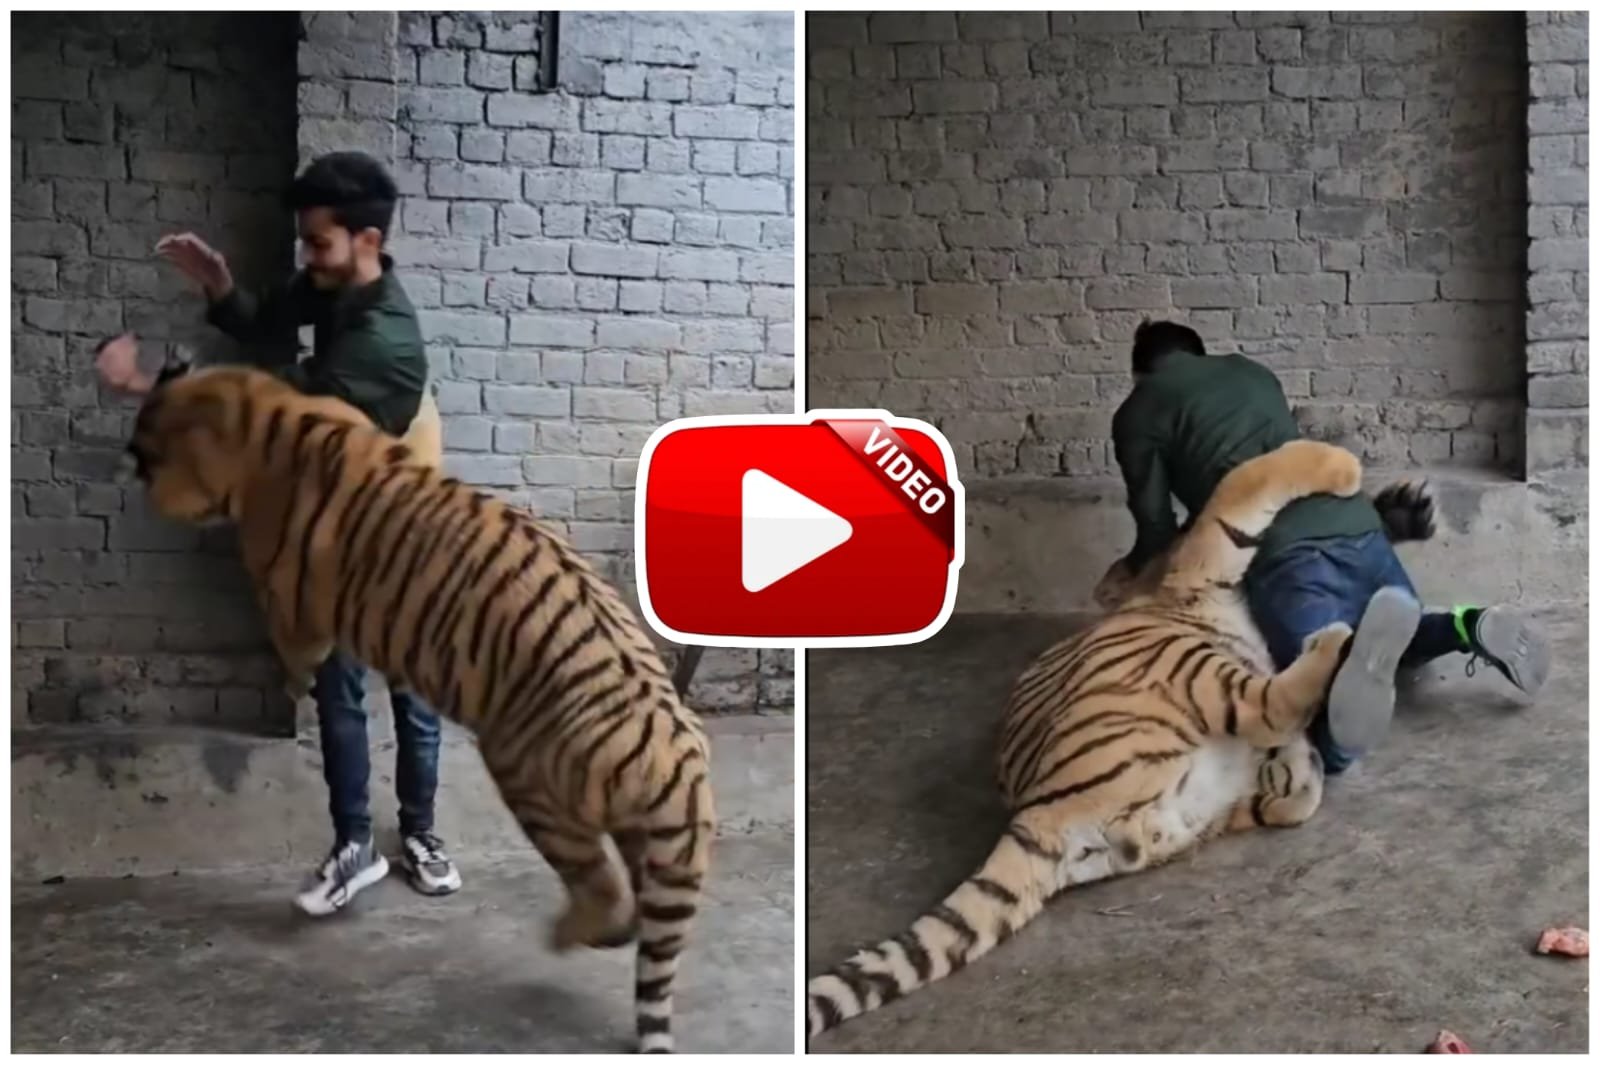 Garden Video | Ferocious tiger seen caressing a man